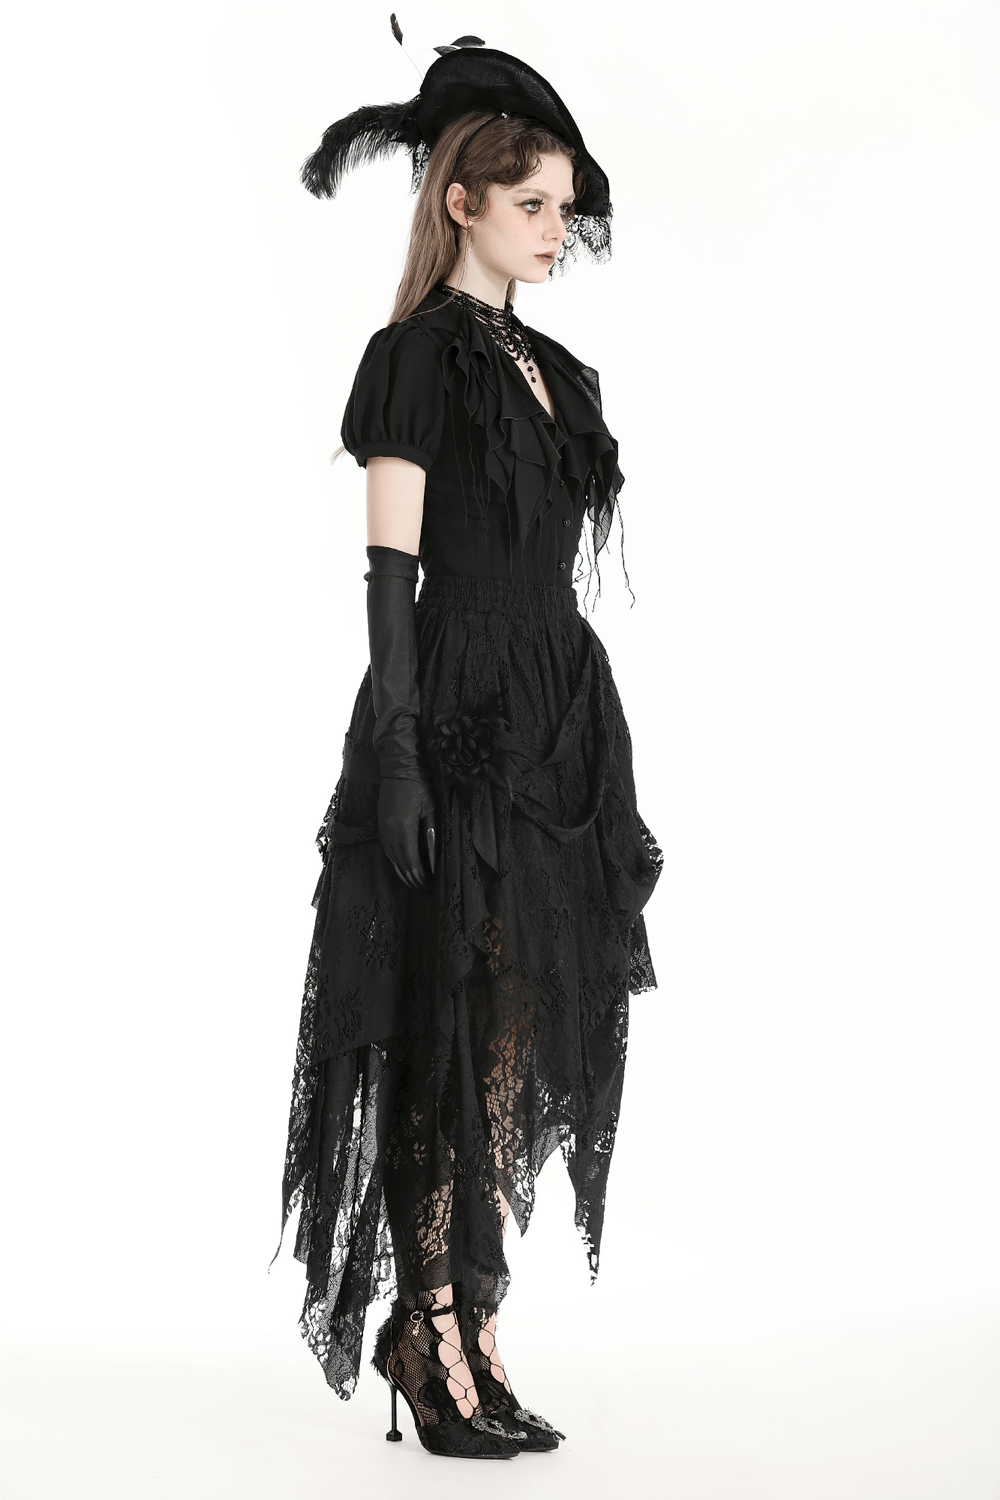 Chic Black Lace Asymmetrical Gothic Skirt - Edgy Elegance